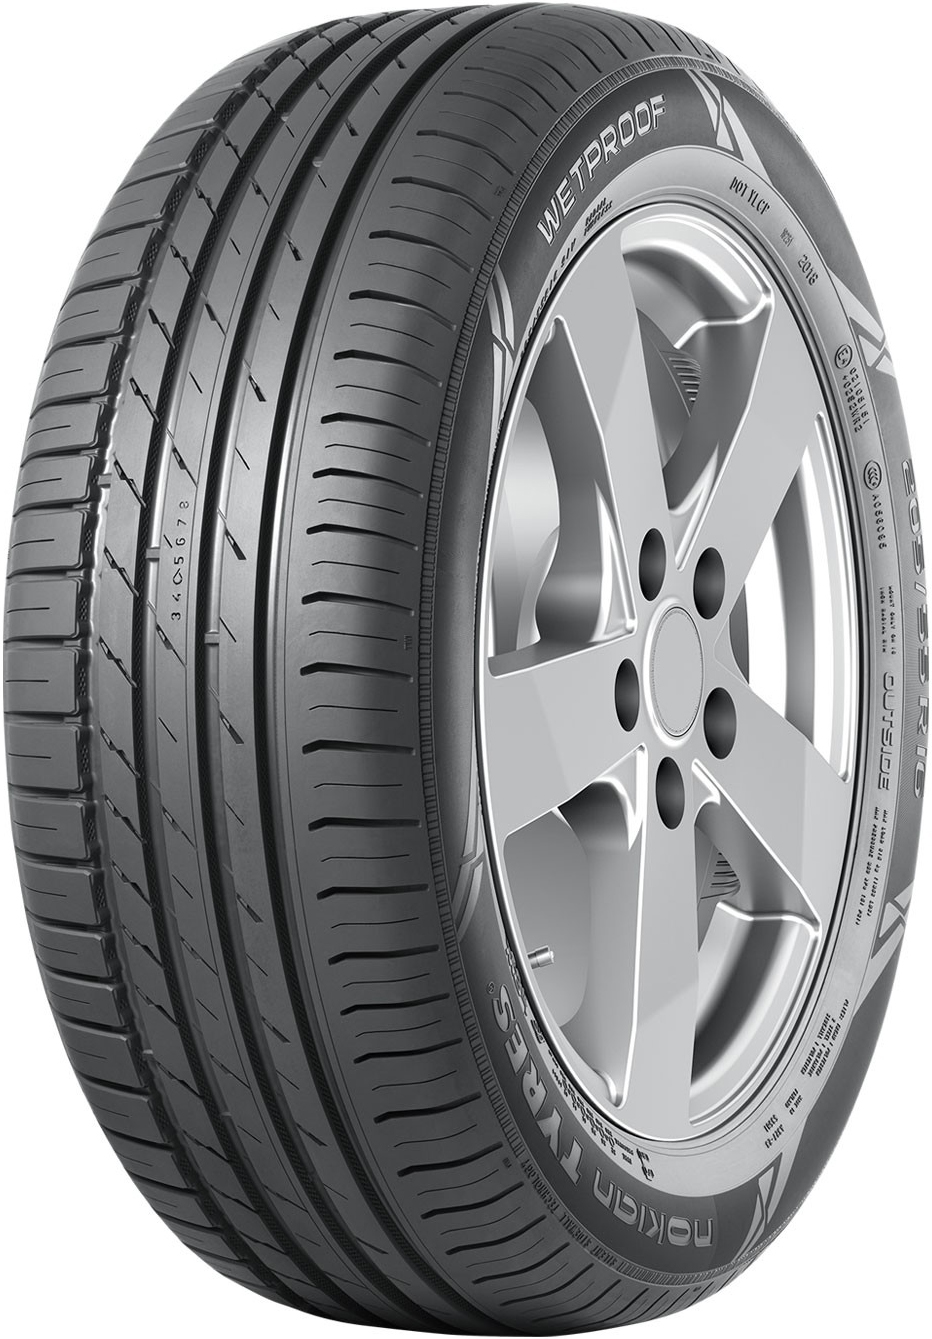 Автомобилни гуми NOKIAN WETPROOF XL 185/55 R15 86H